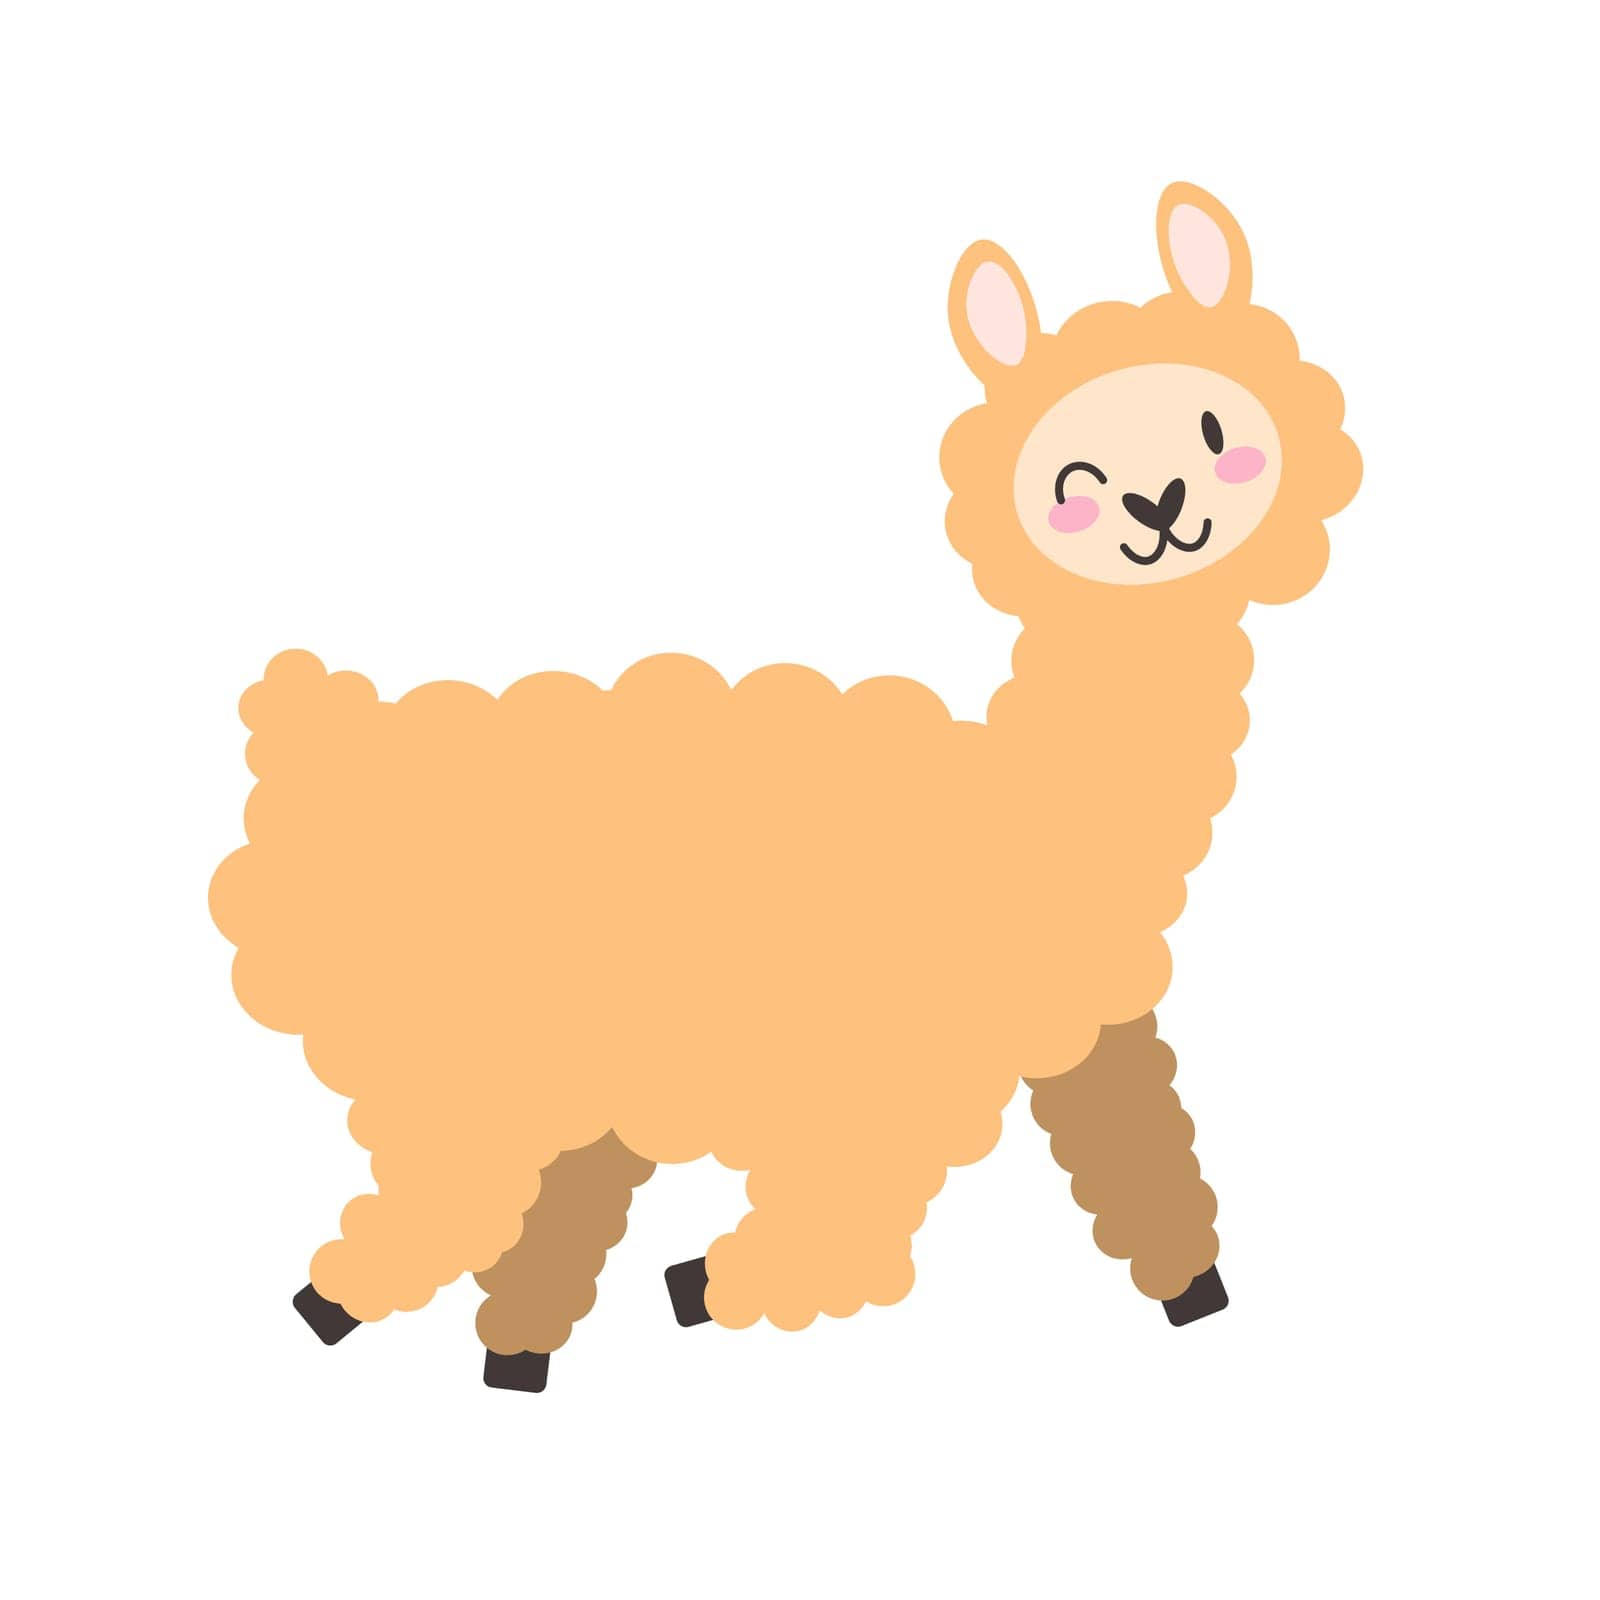 Cute fluffy llama isolated on a white background. Hand drawn alpaca flat vector illustration. Nursery decoration. Stock vector illustration isolated on white background.